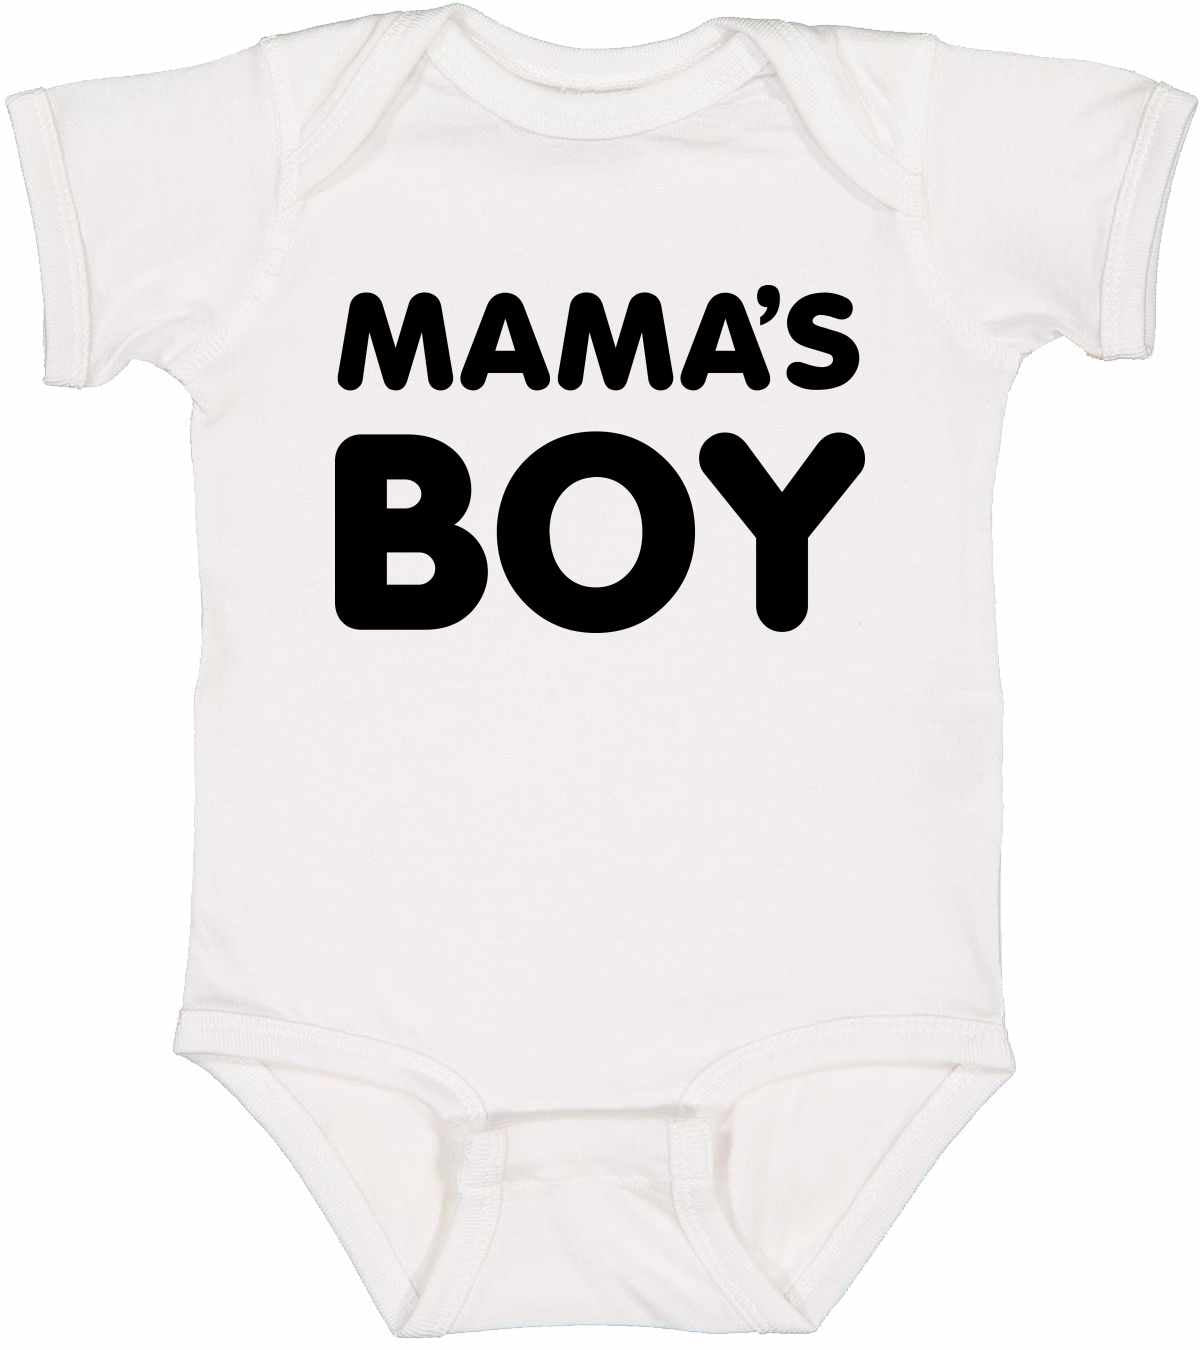 MAMA'S BOY on Infant BodySuit (#1185-10)